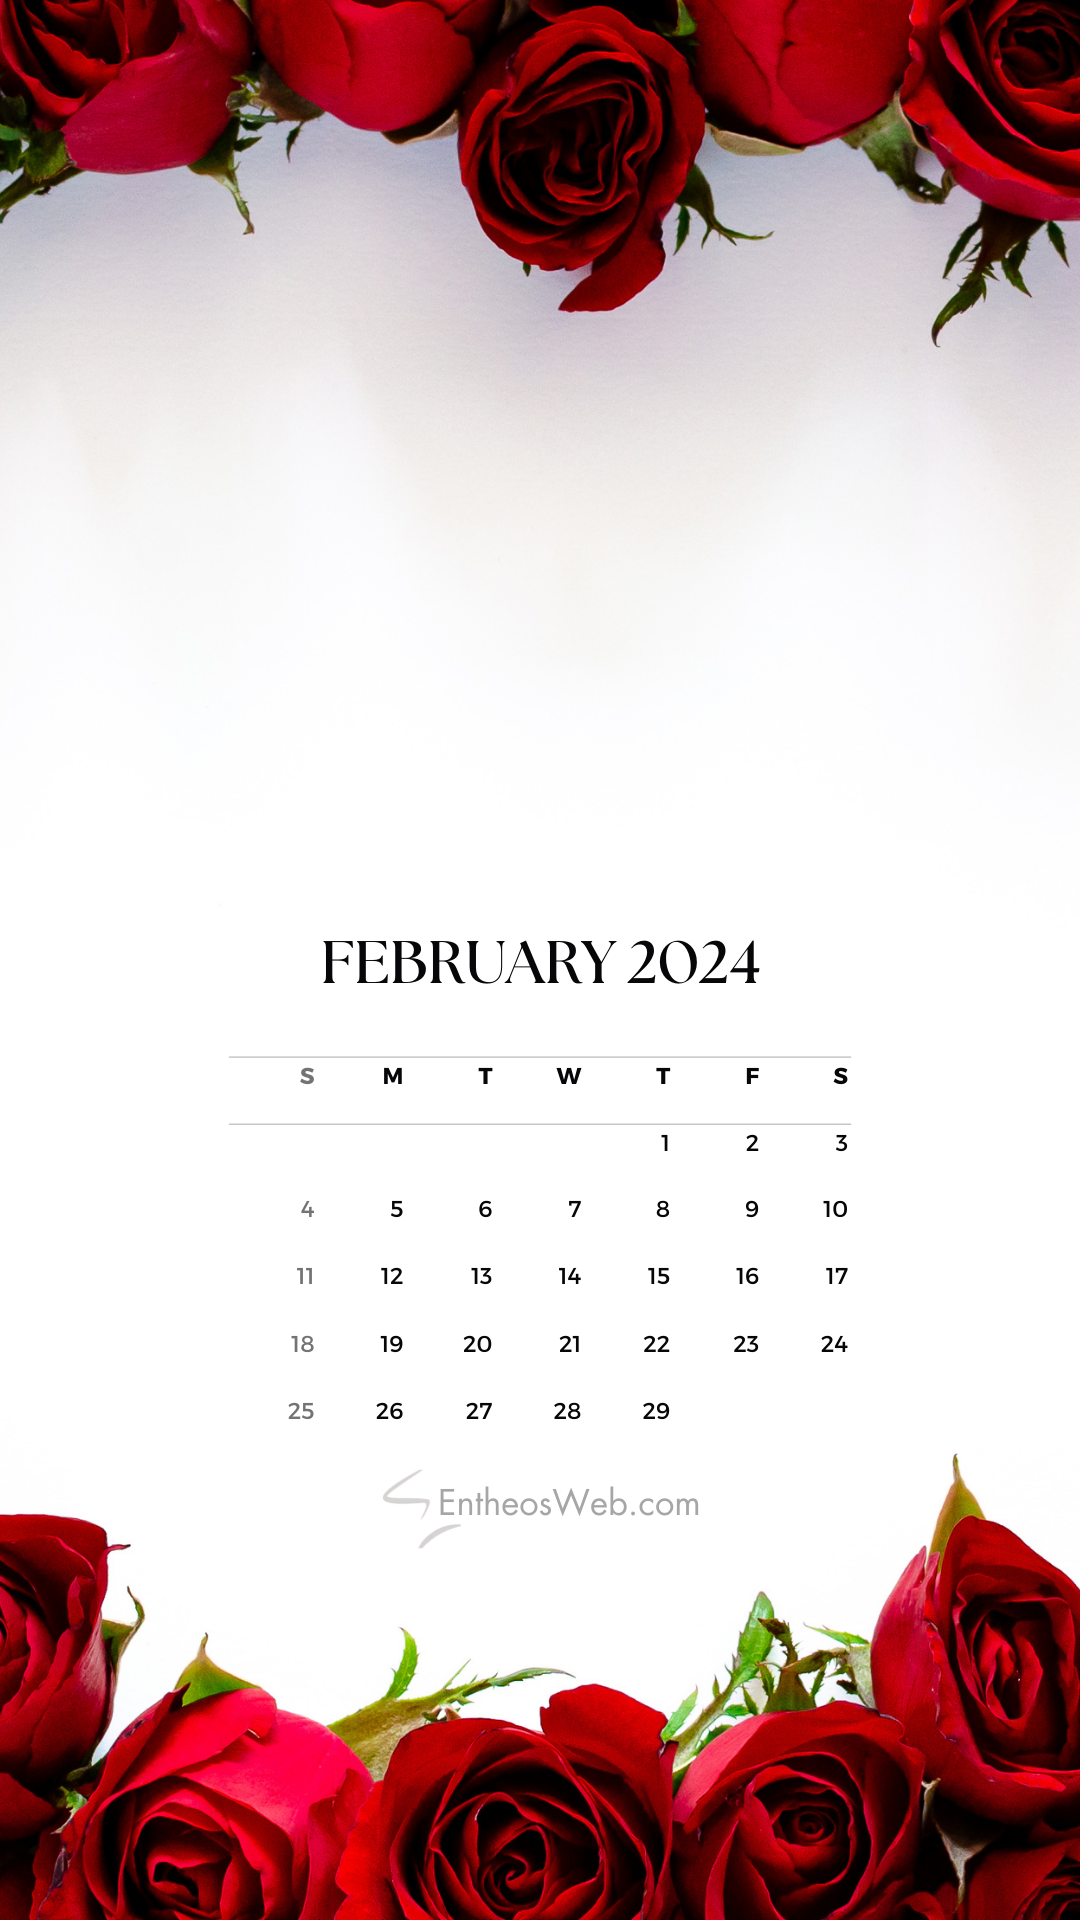 February 2024 Phone Wallpaper Calendar